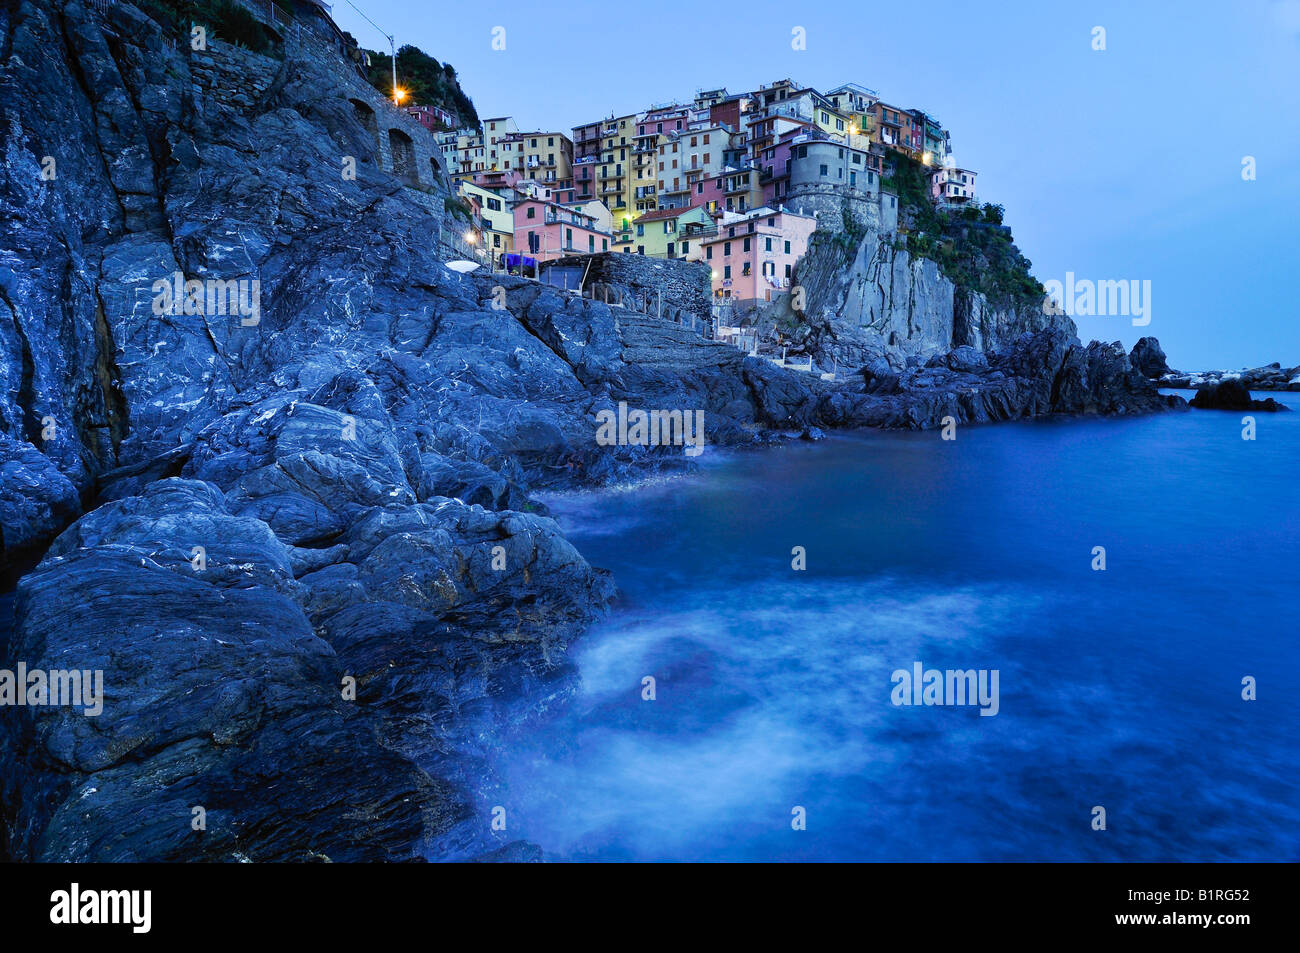 Village of Manarola nestled atop steep coastline at dusk, Liguria, Cinque Terre, Italy, Europe Stock Photo